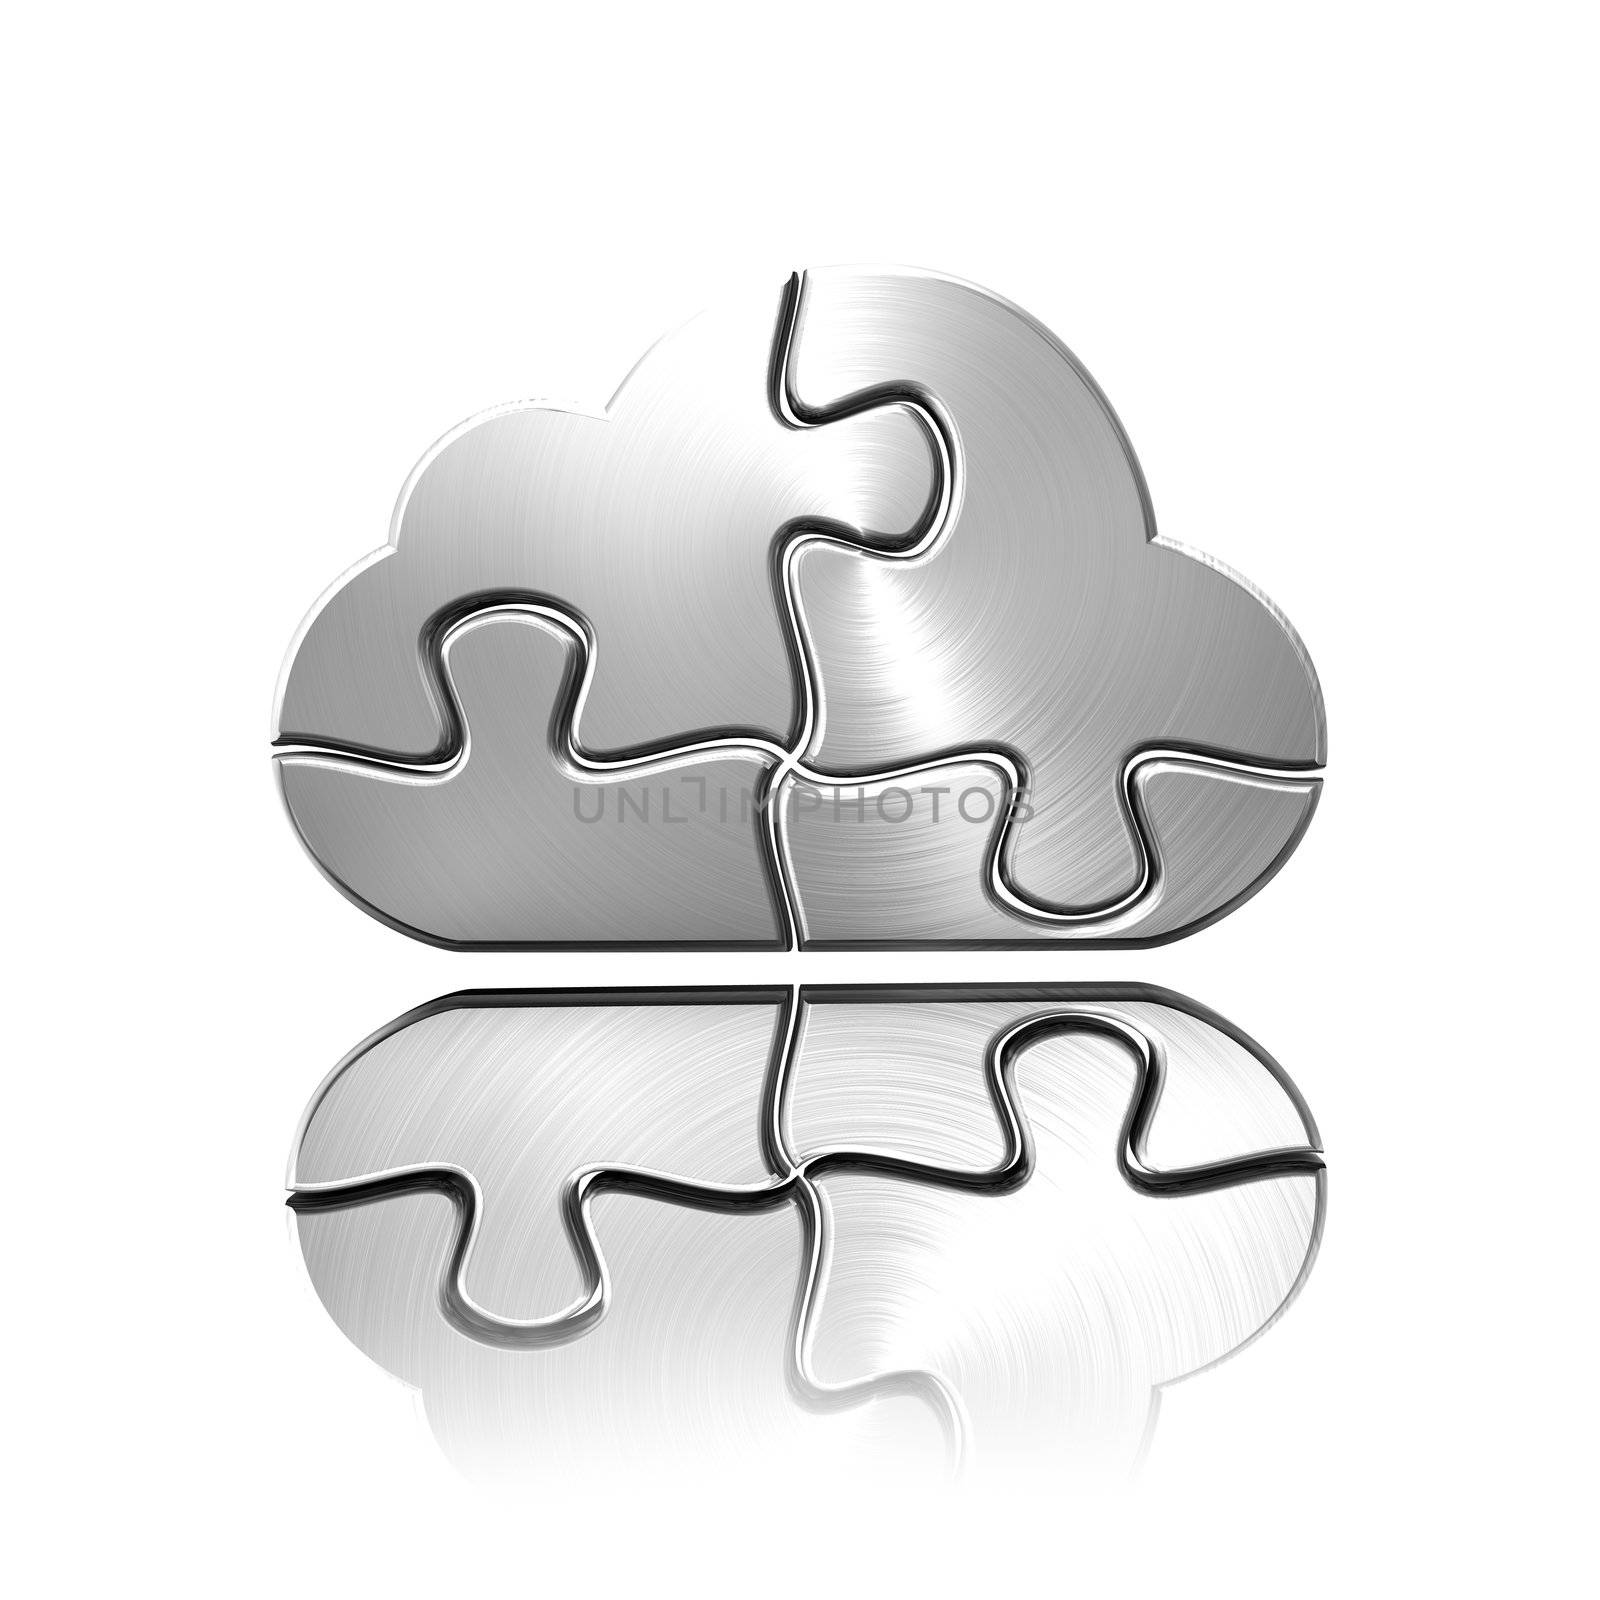 A metal cloud computing jigsaw